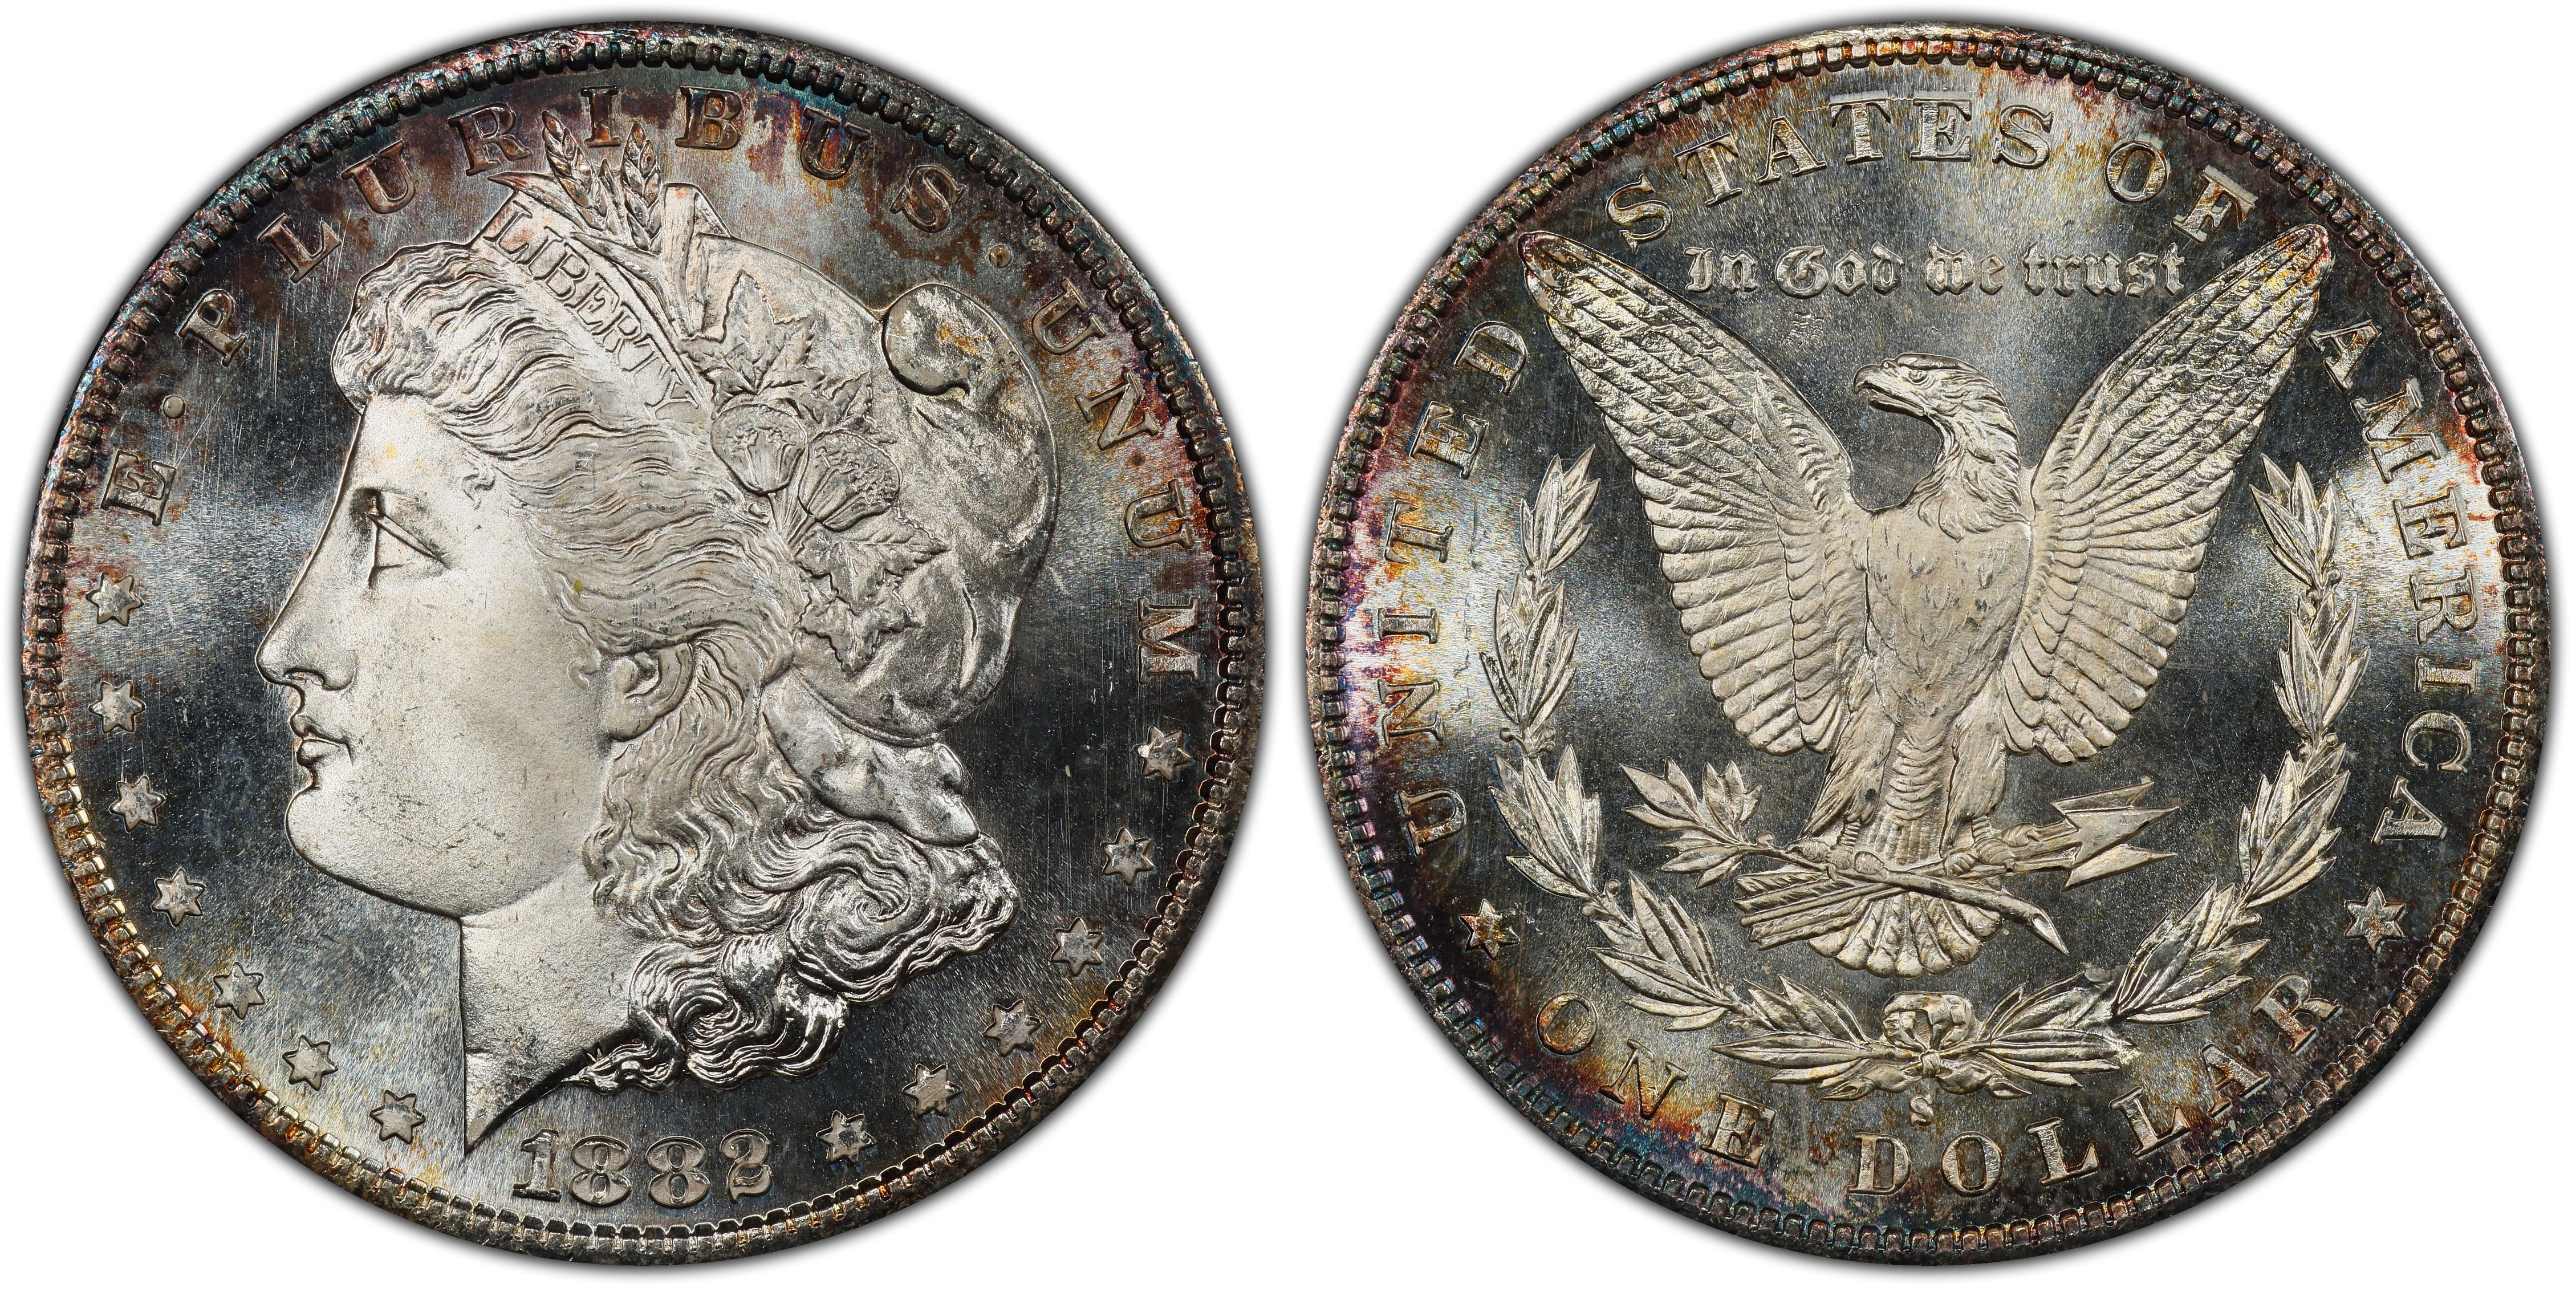 1882-S $1, PL (Regular Strike) Morgan Dollar - PCGS CoinFacts